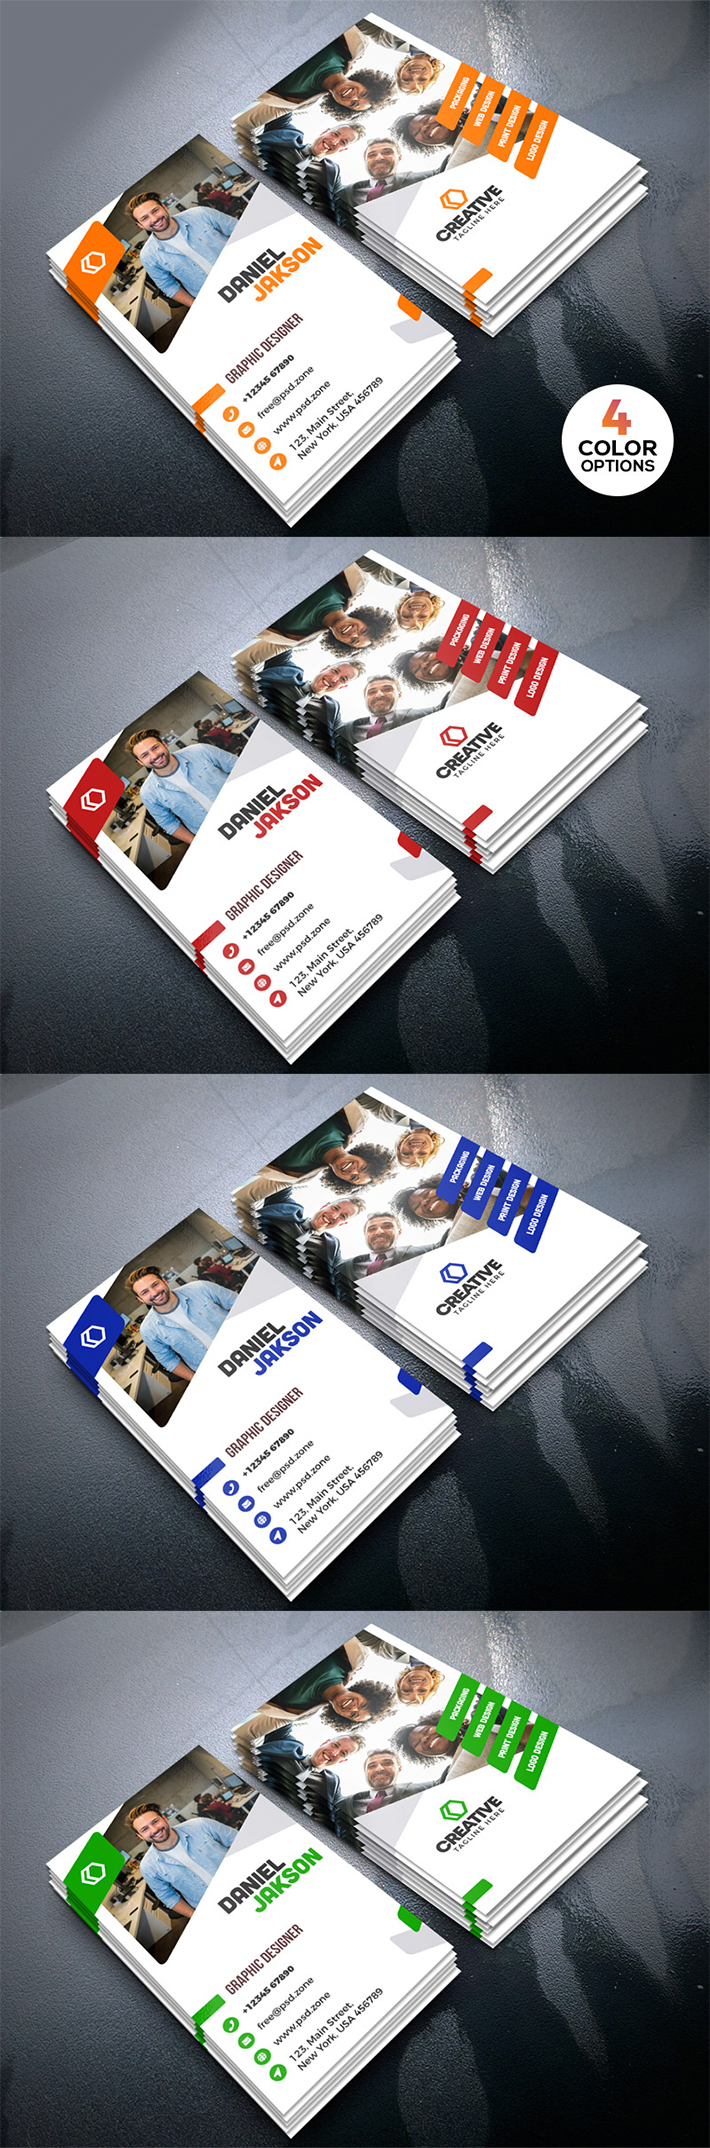 Free Download Creative Multi-Purpose Business Card PSD Template